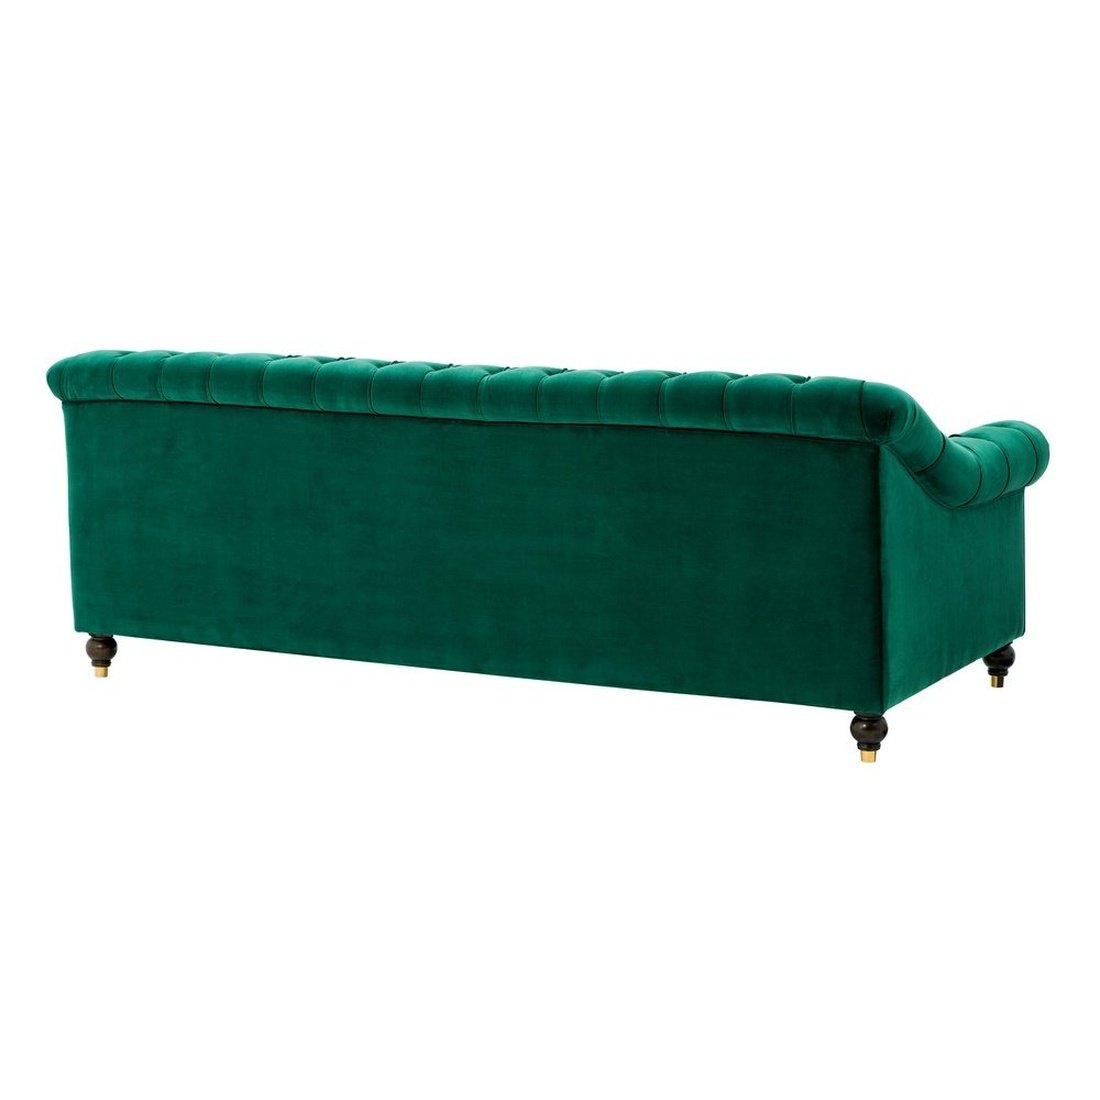  Eichholtz-Eichholtz Brian 3 Seater Sofa in Cameron Green-Green 45 